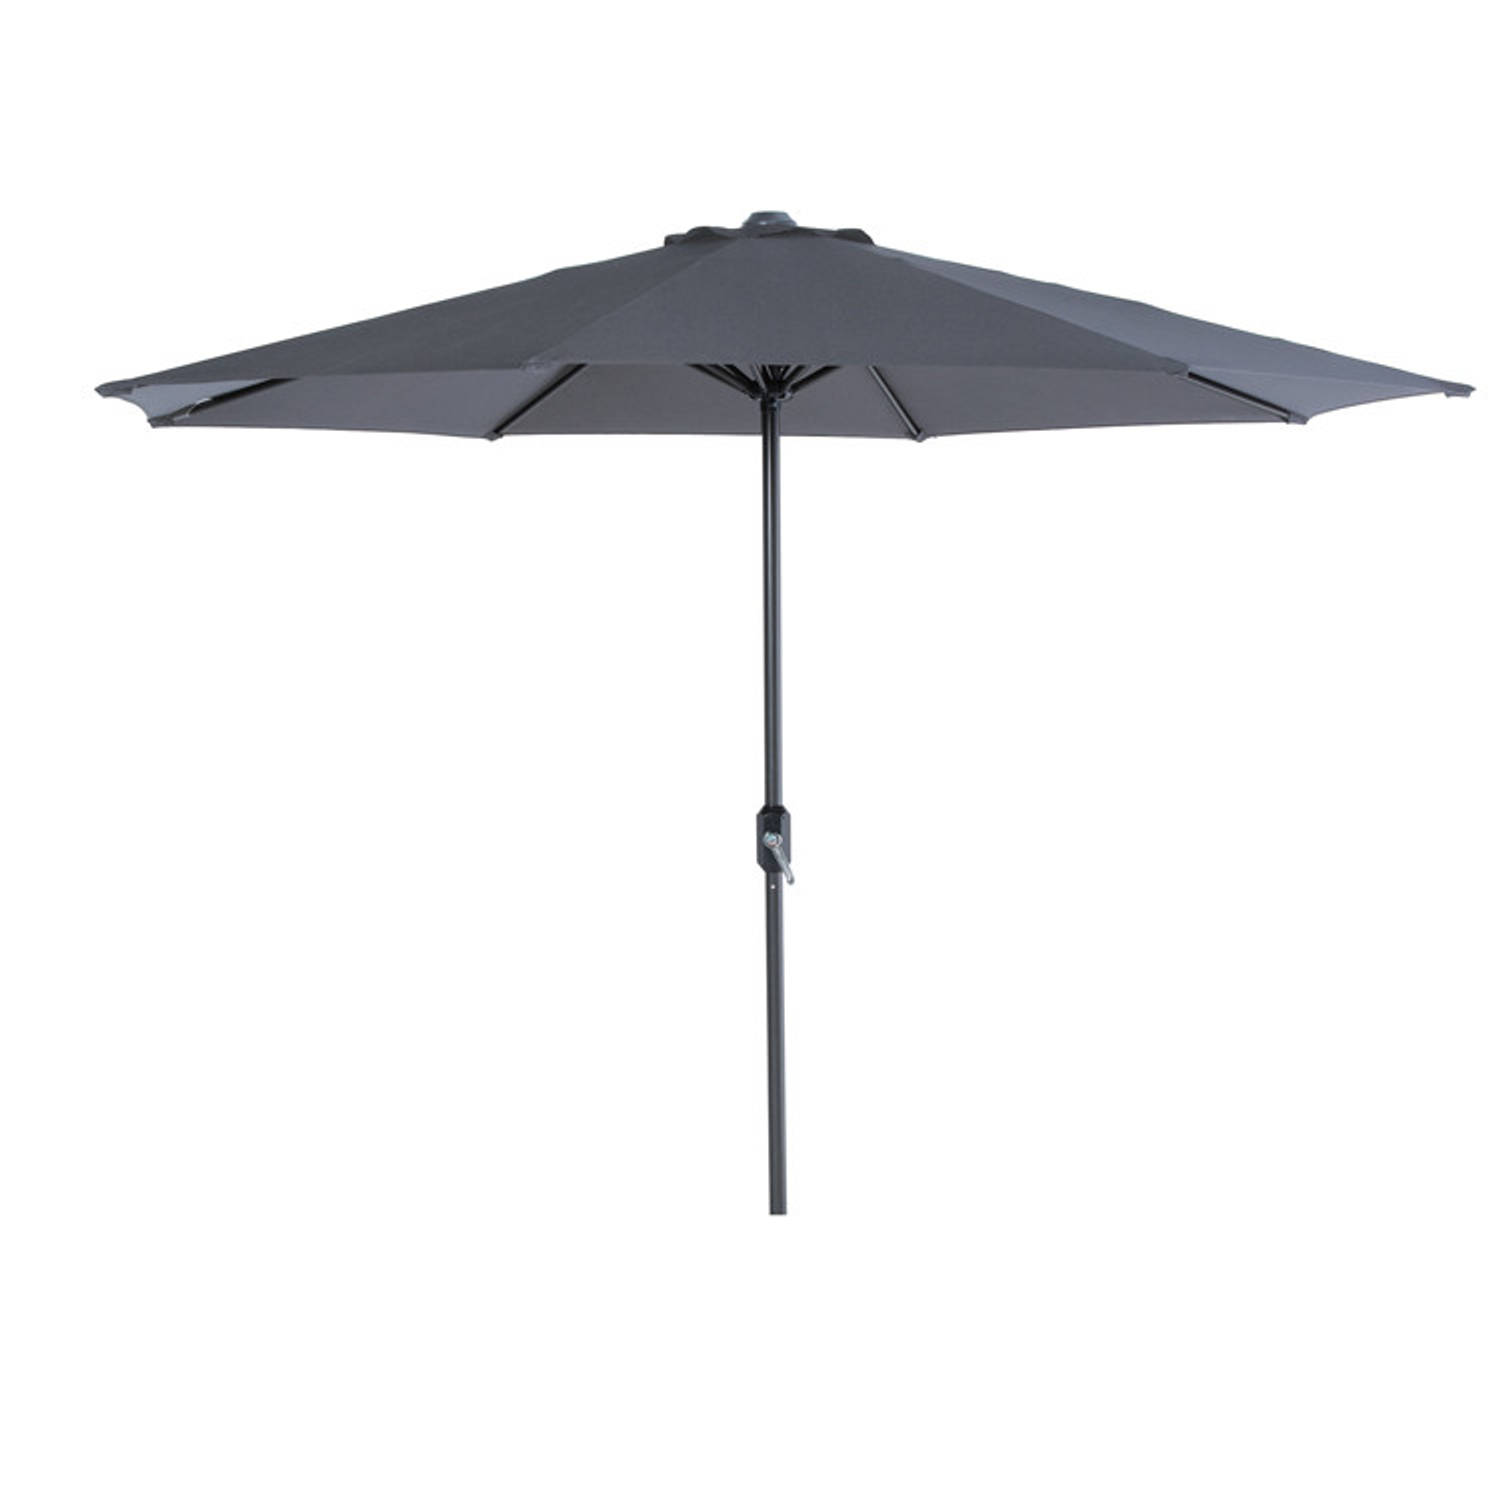 Lotus parasol Ã˜300 royal grey-donker grijs